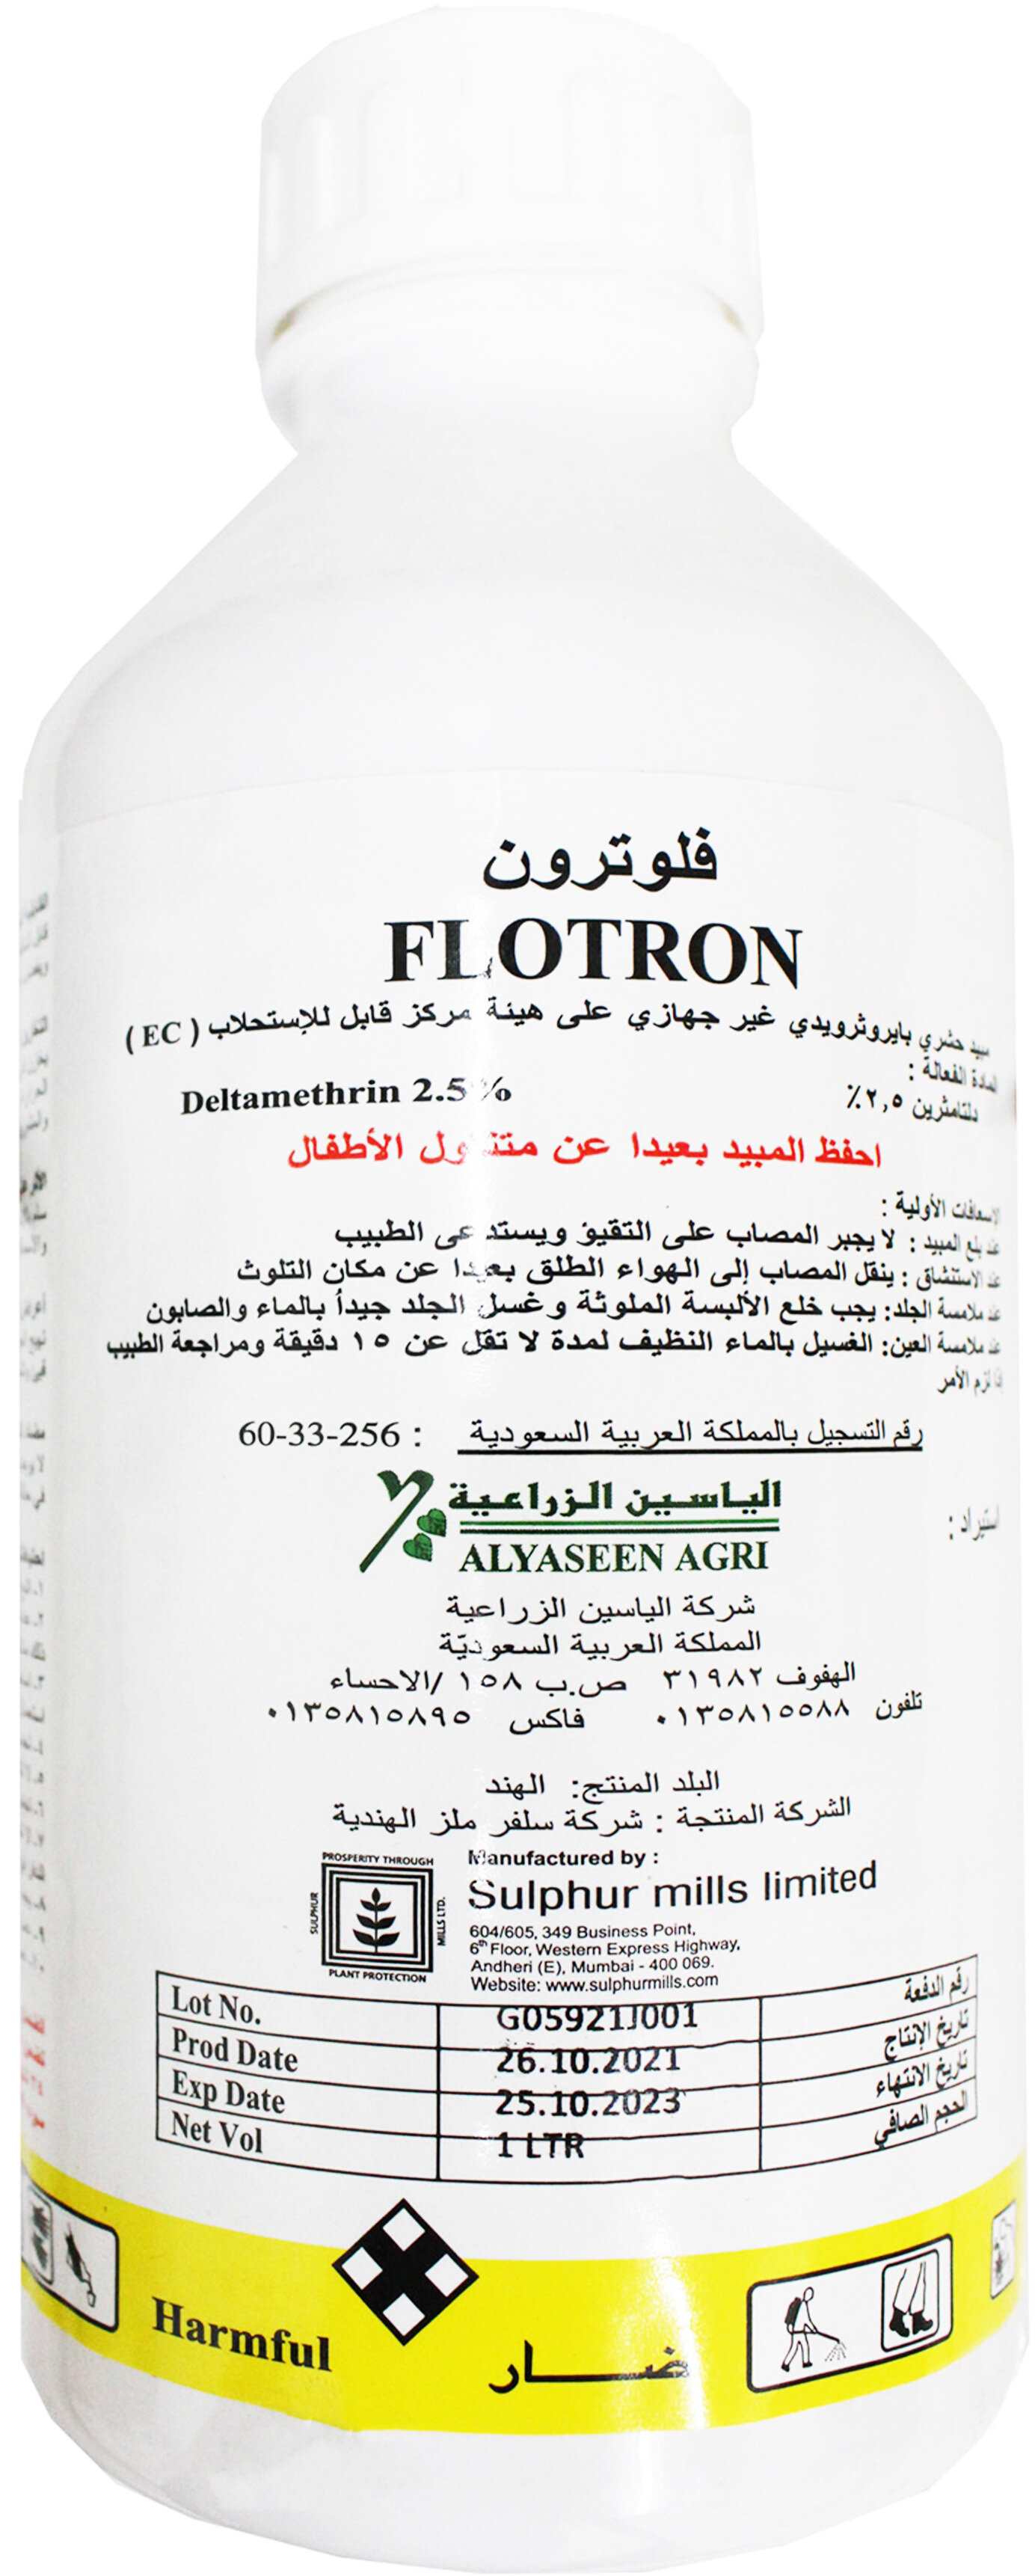 فلوترون (دلتامثرين 2.5 % EC)